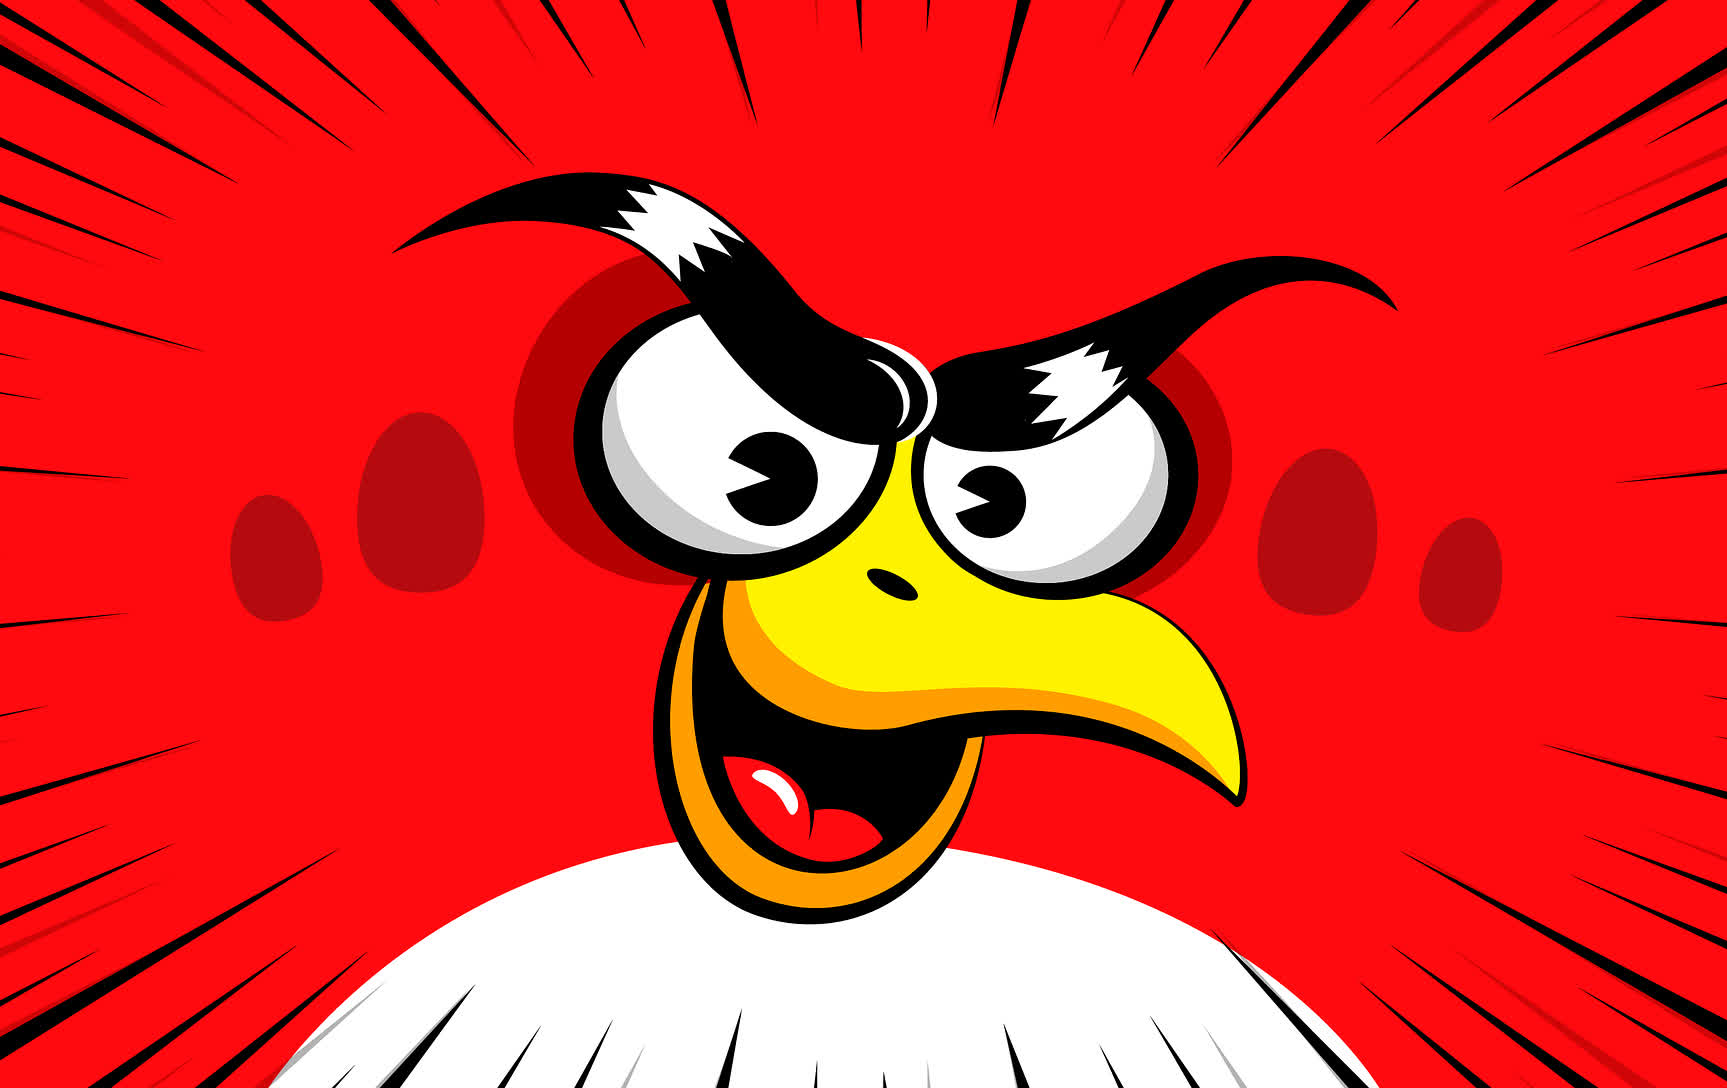 Sega agrees to buy Angry Birds maker Rovio for $772 million